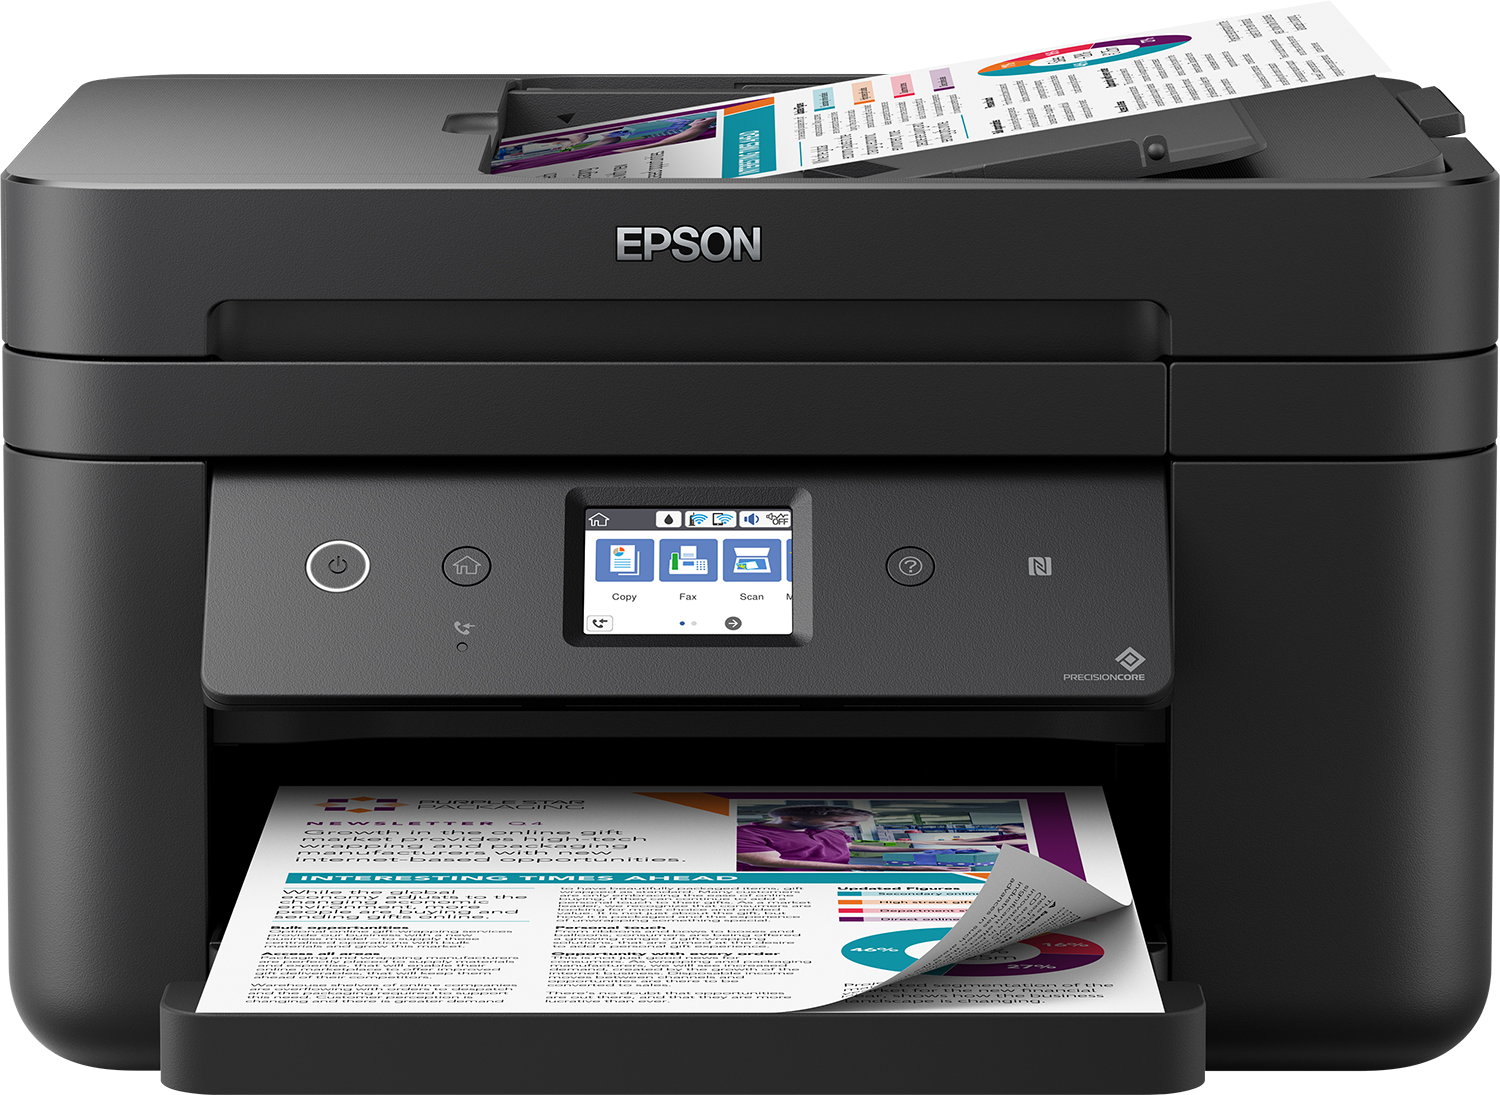 Workforce Wf 2860dwf Microbusiness Inkjet Printers Printers Products Epson United Kingdom